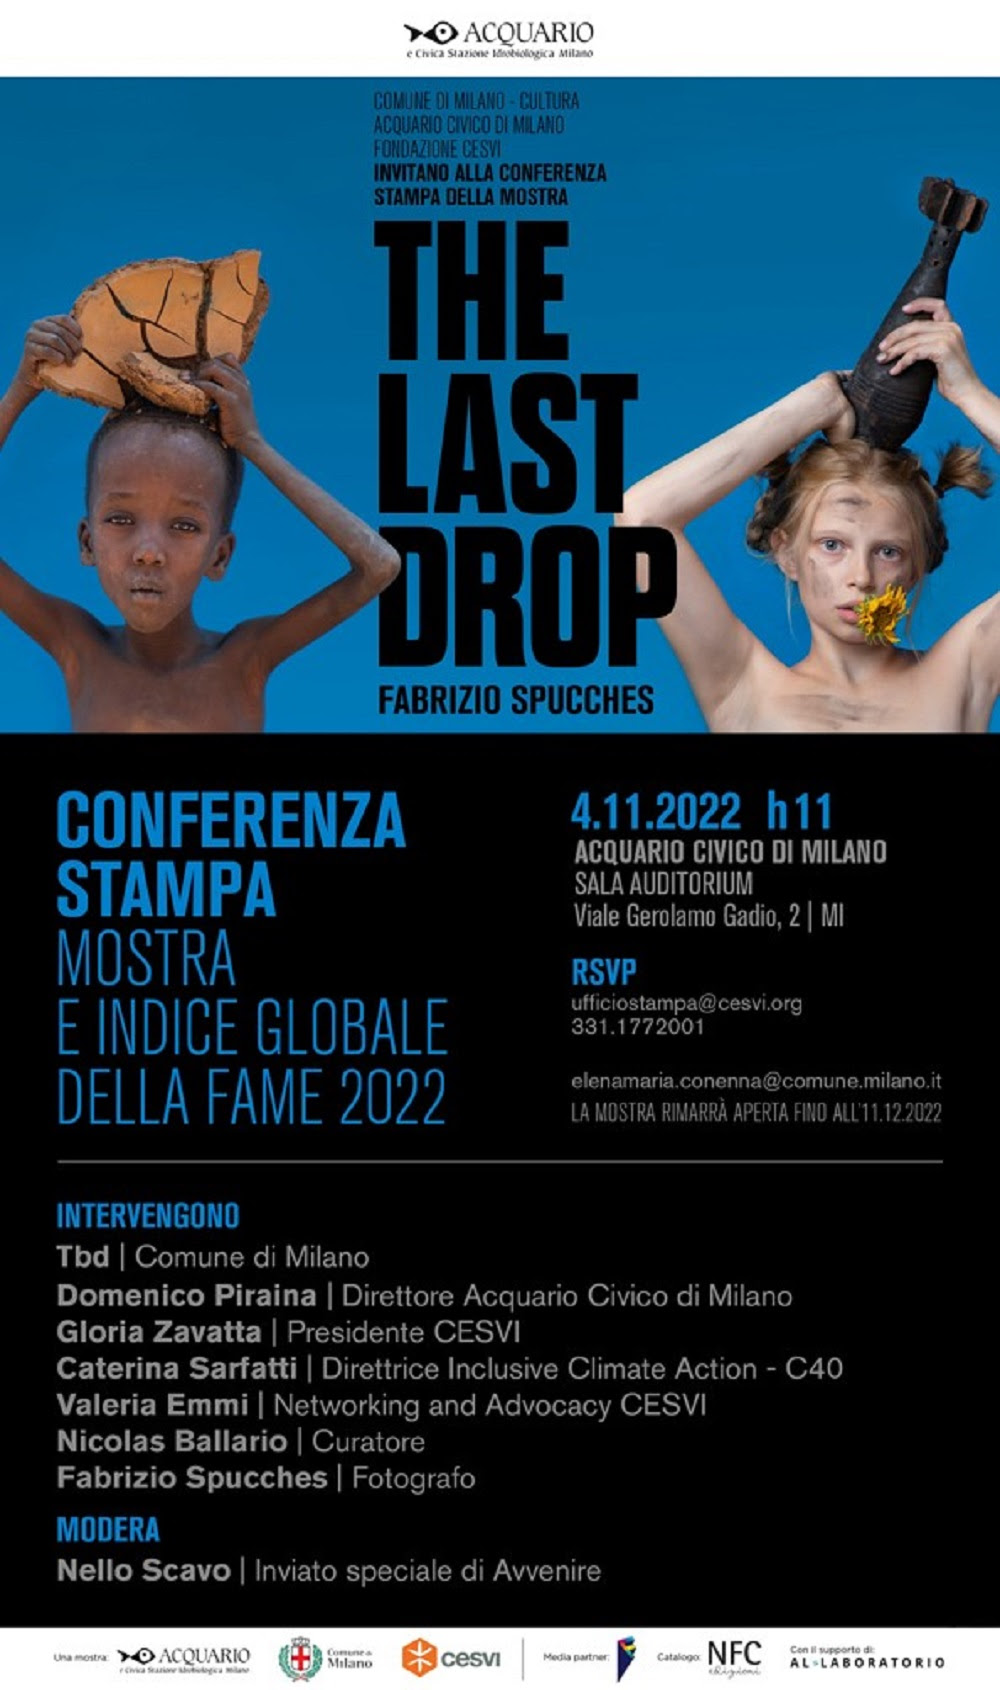 Fabrizio Spucches - The last drop